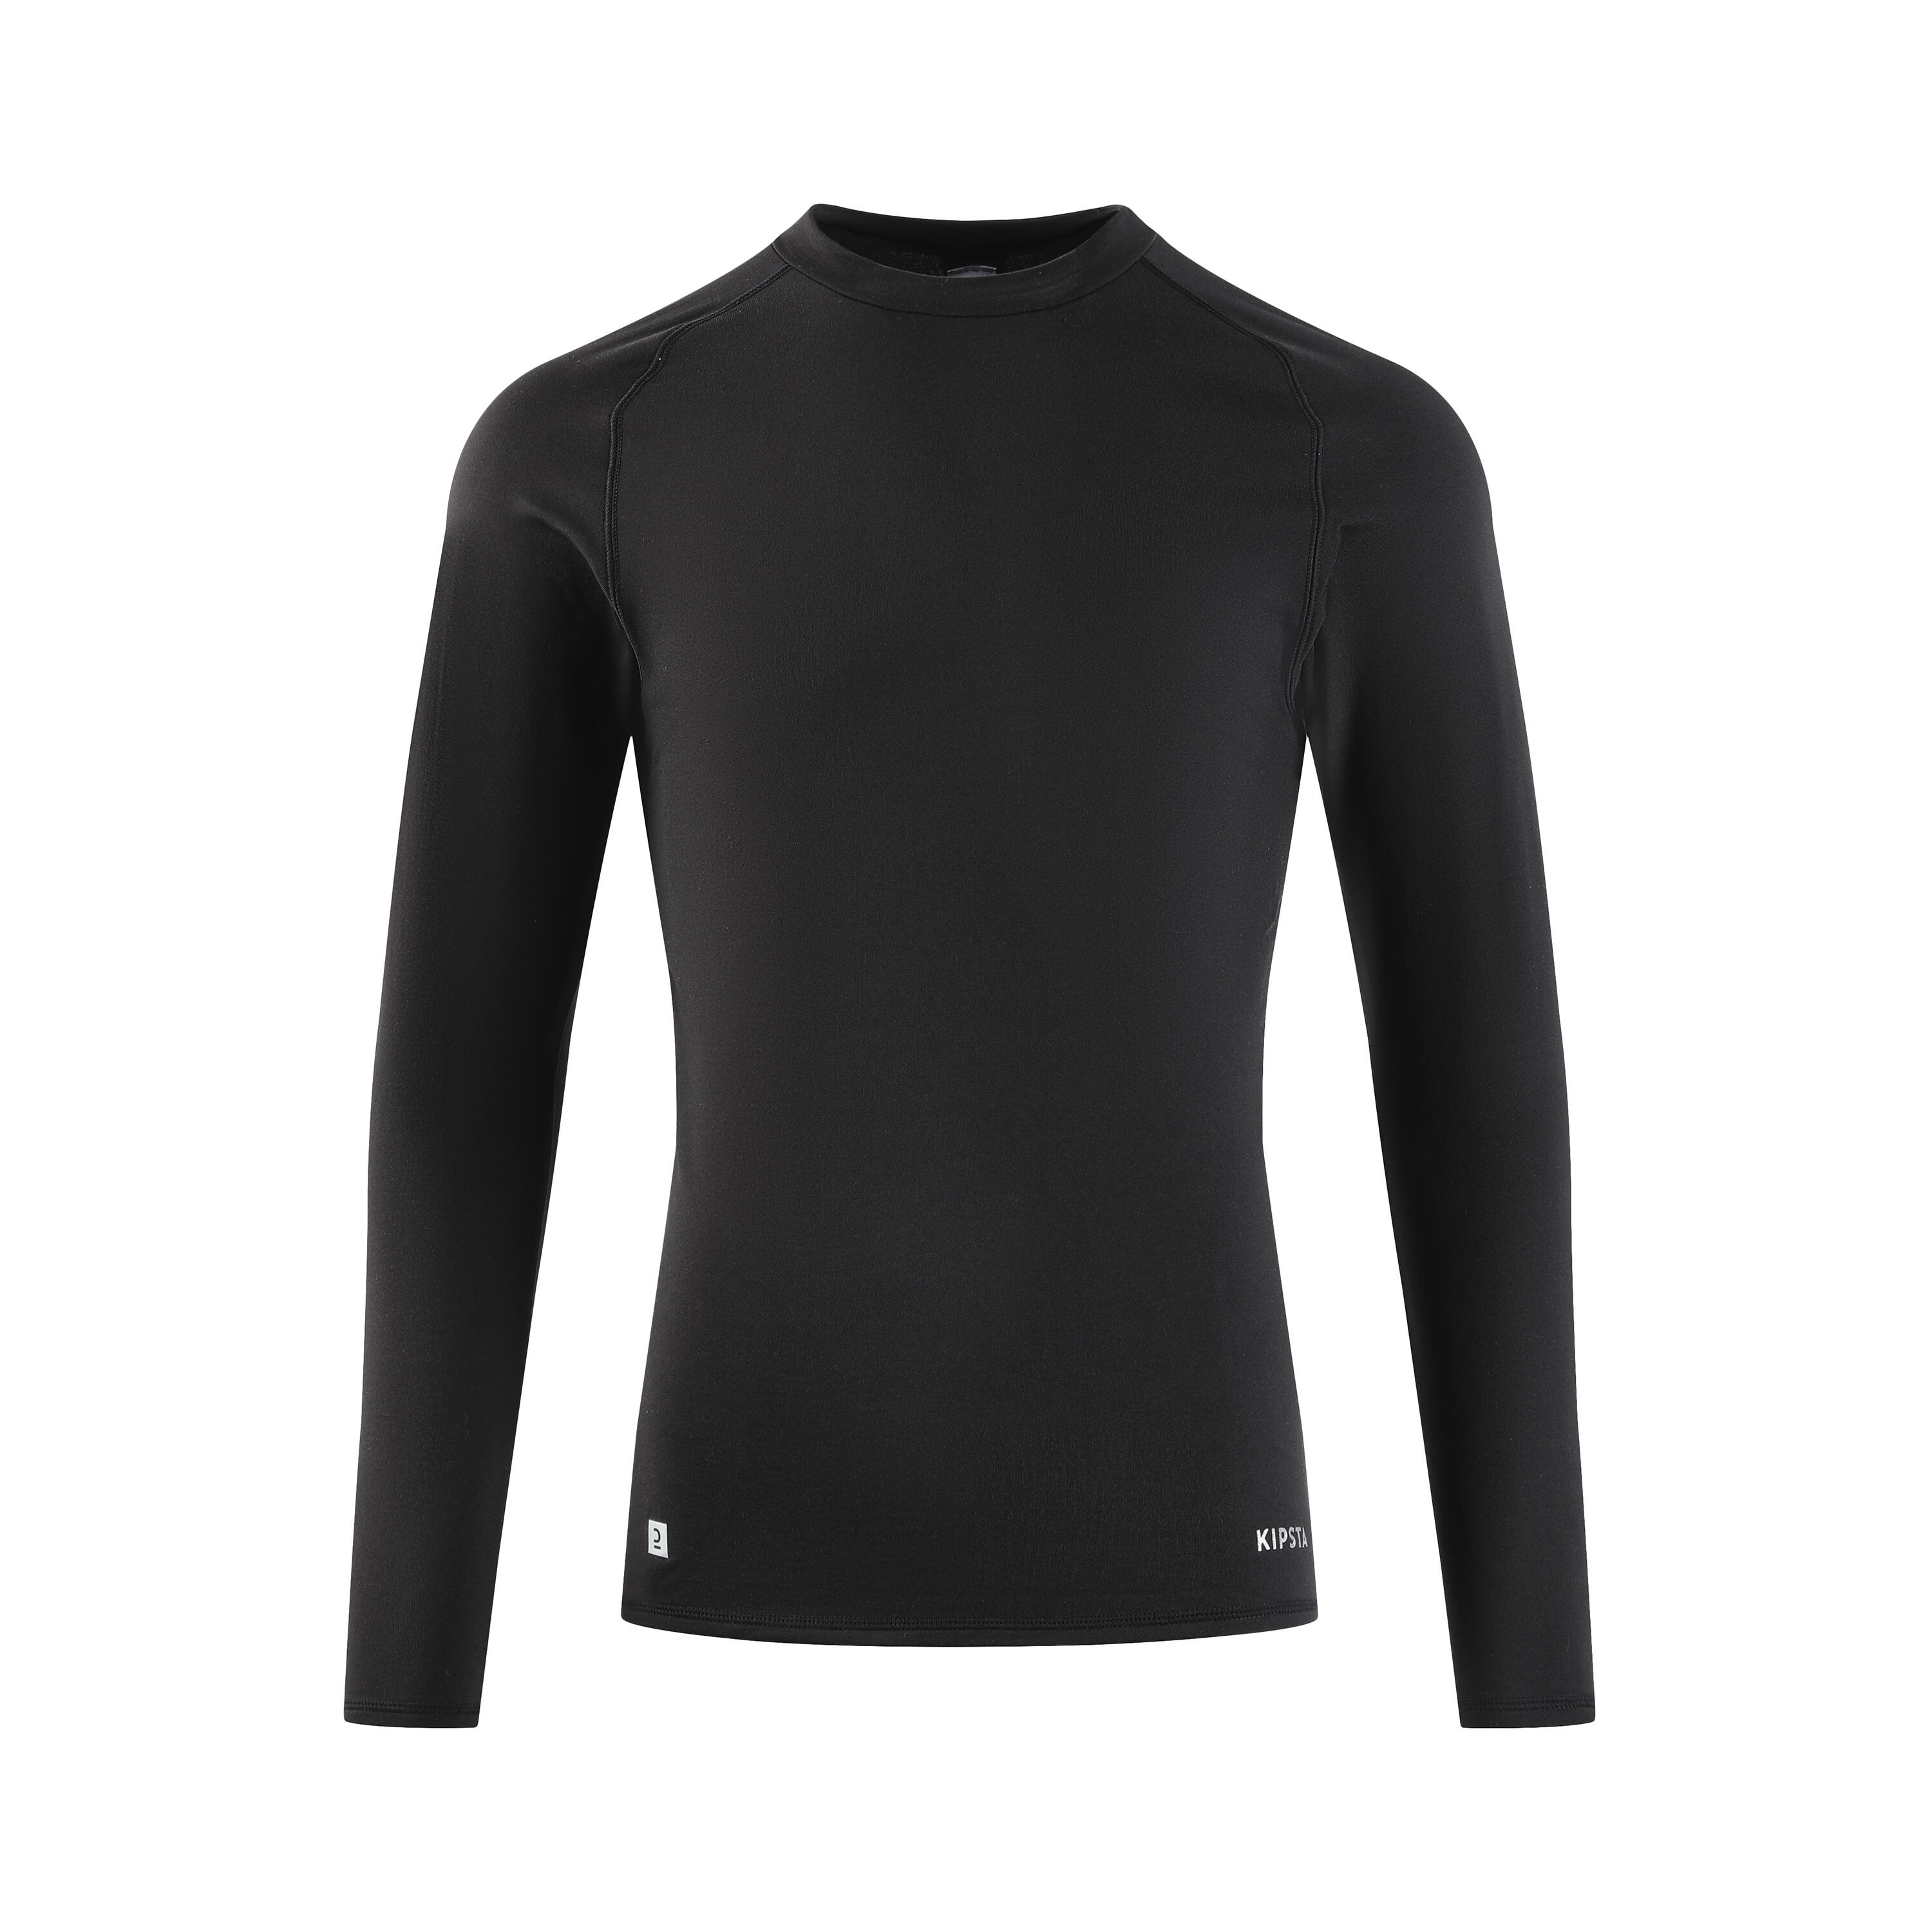 Men's Soccer Long-Sleeved Thermal Base Layer Top Keepcomfort 100 - Black